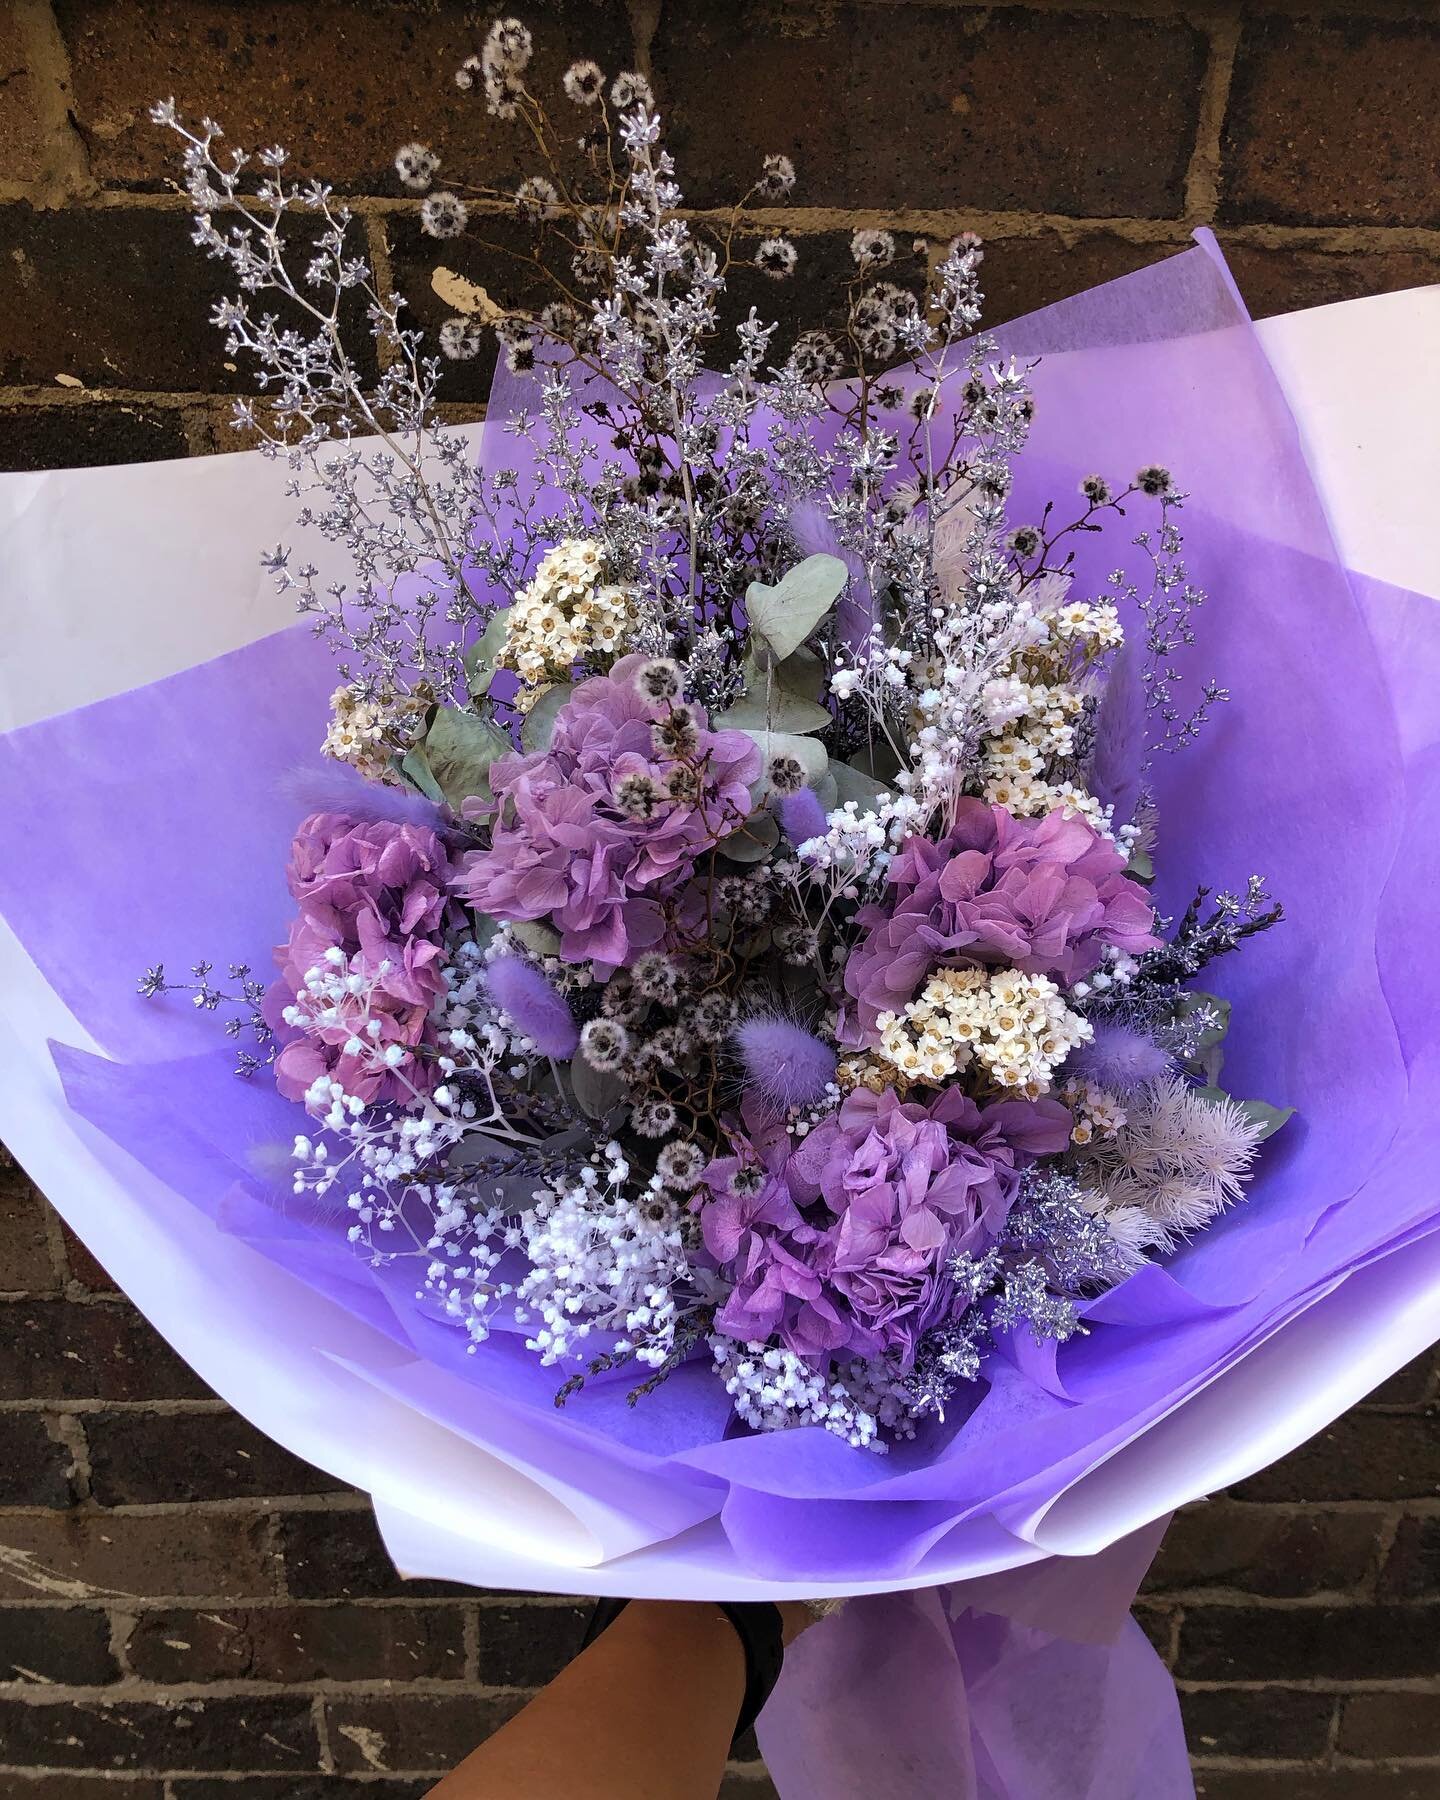 🔮🔮🔮
-
-
-
-
-
- #flowersoftheday #flowerphotography #flowersofinstagram #flowersofig #sydneyflorist #sydneyflowers #preservedflowers